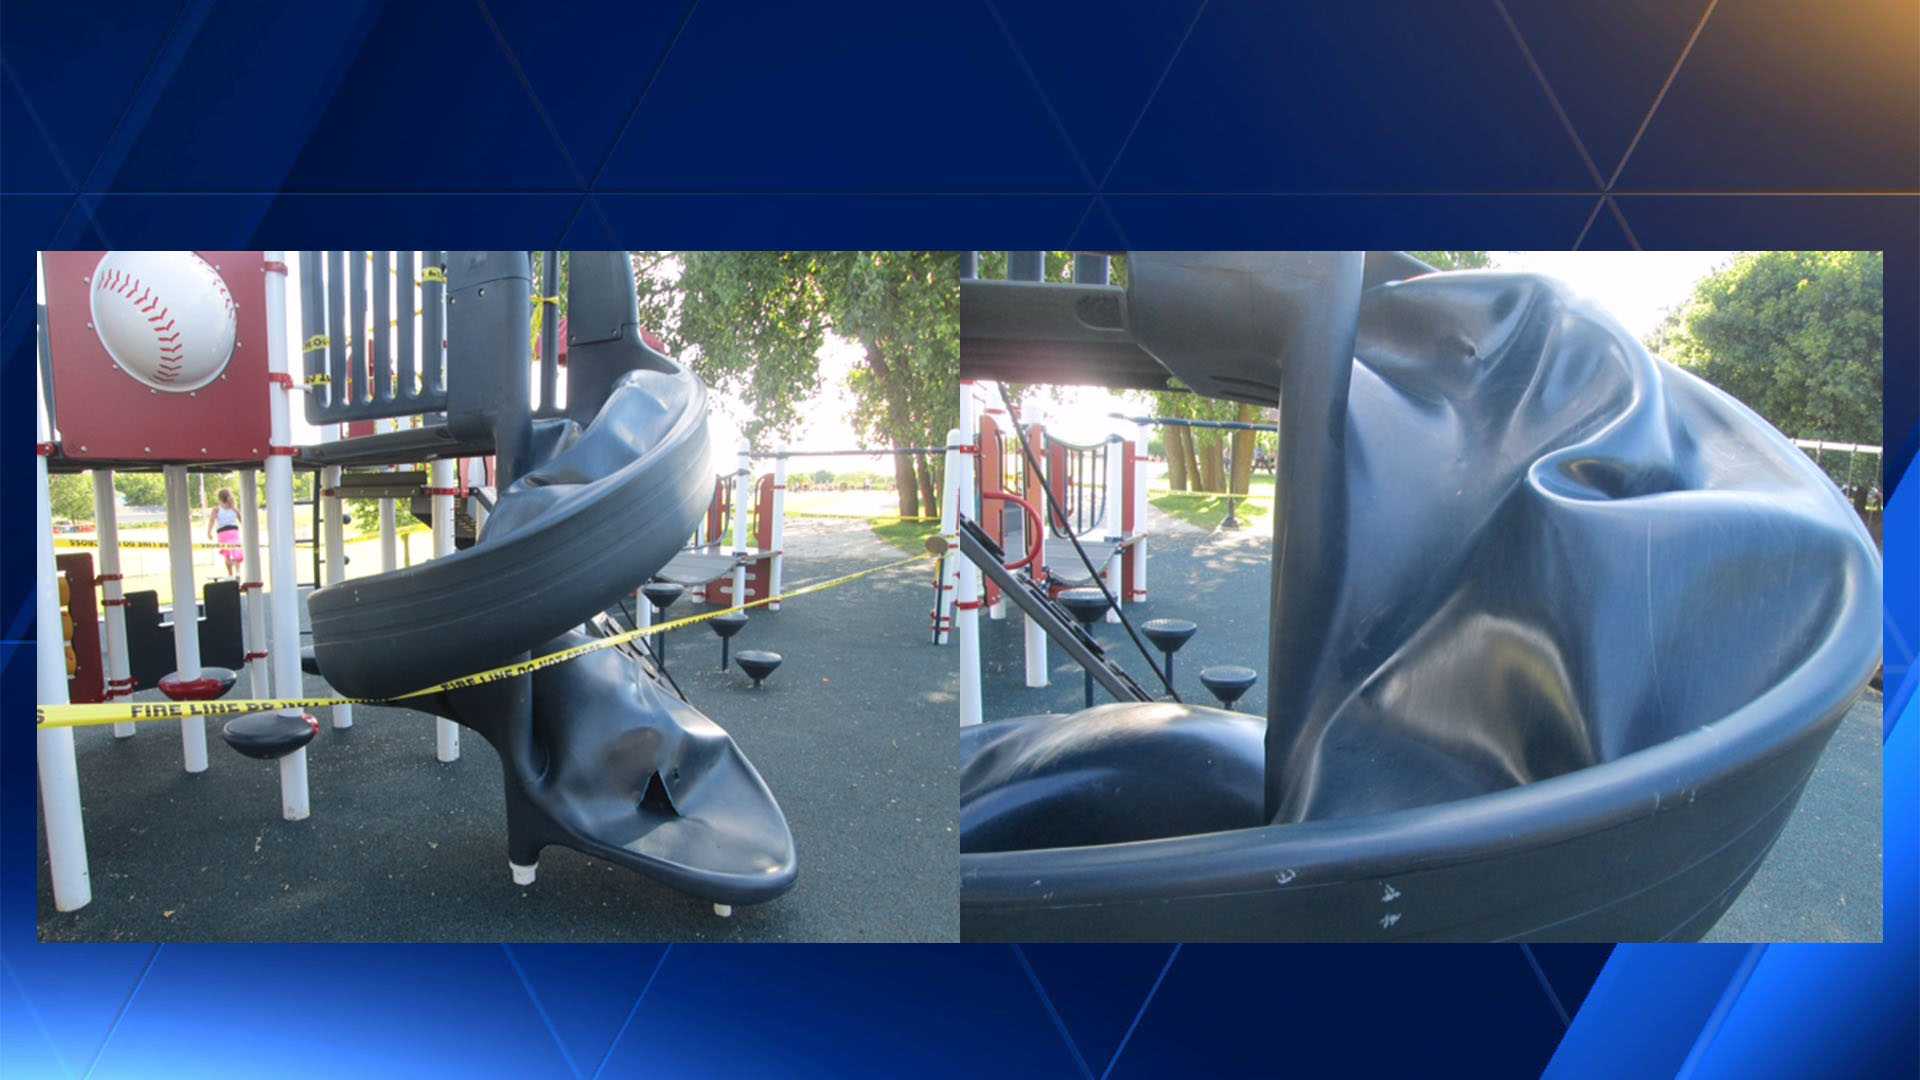 Playground slide explodes, 9-year-old injured